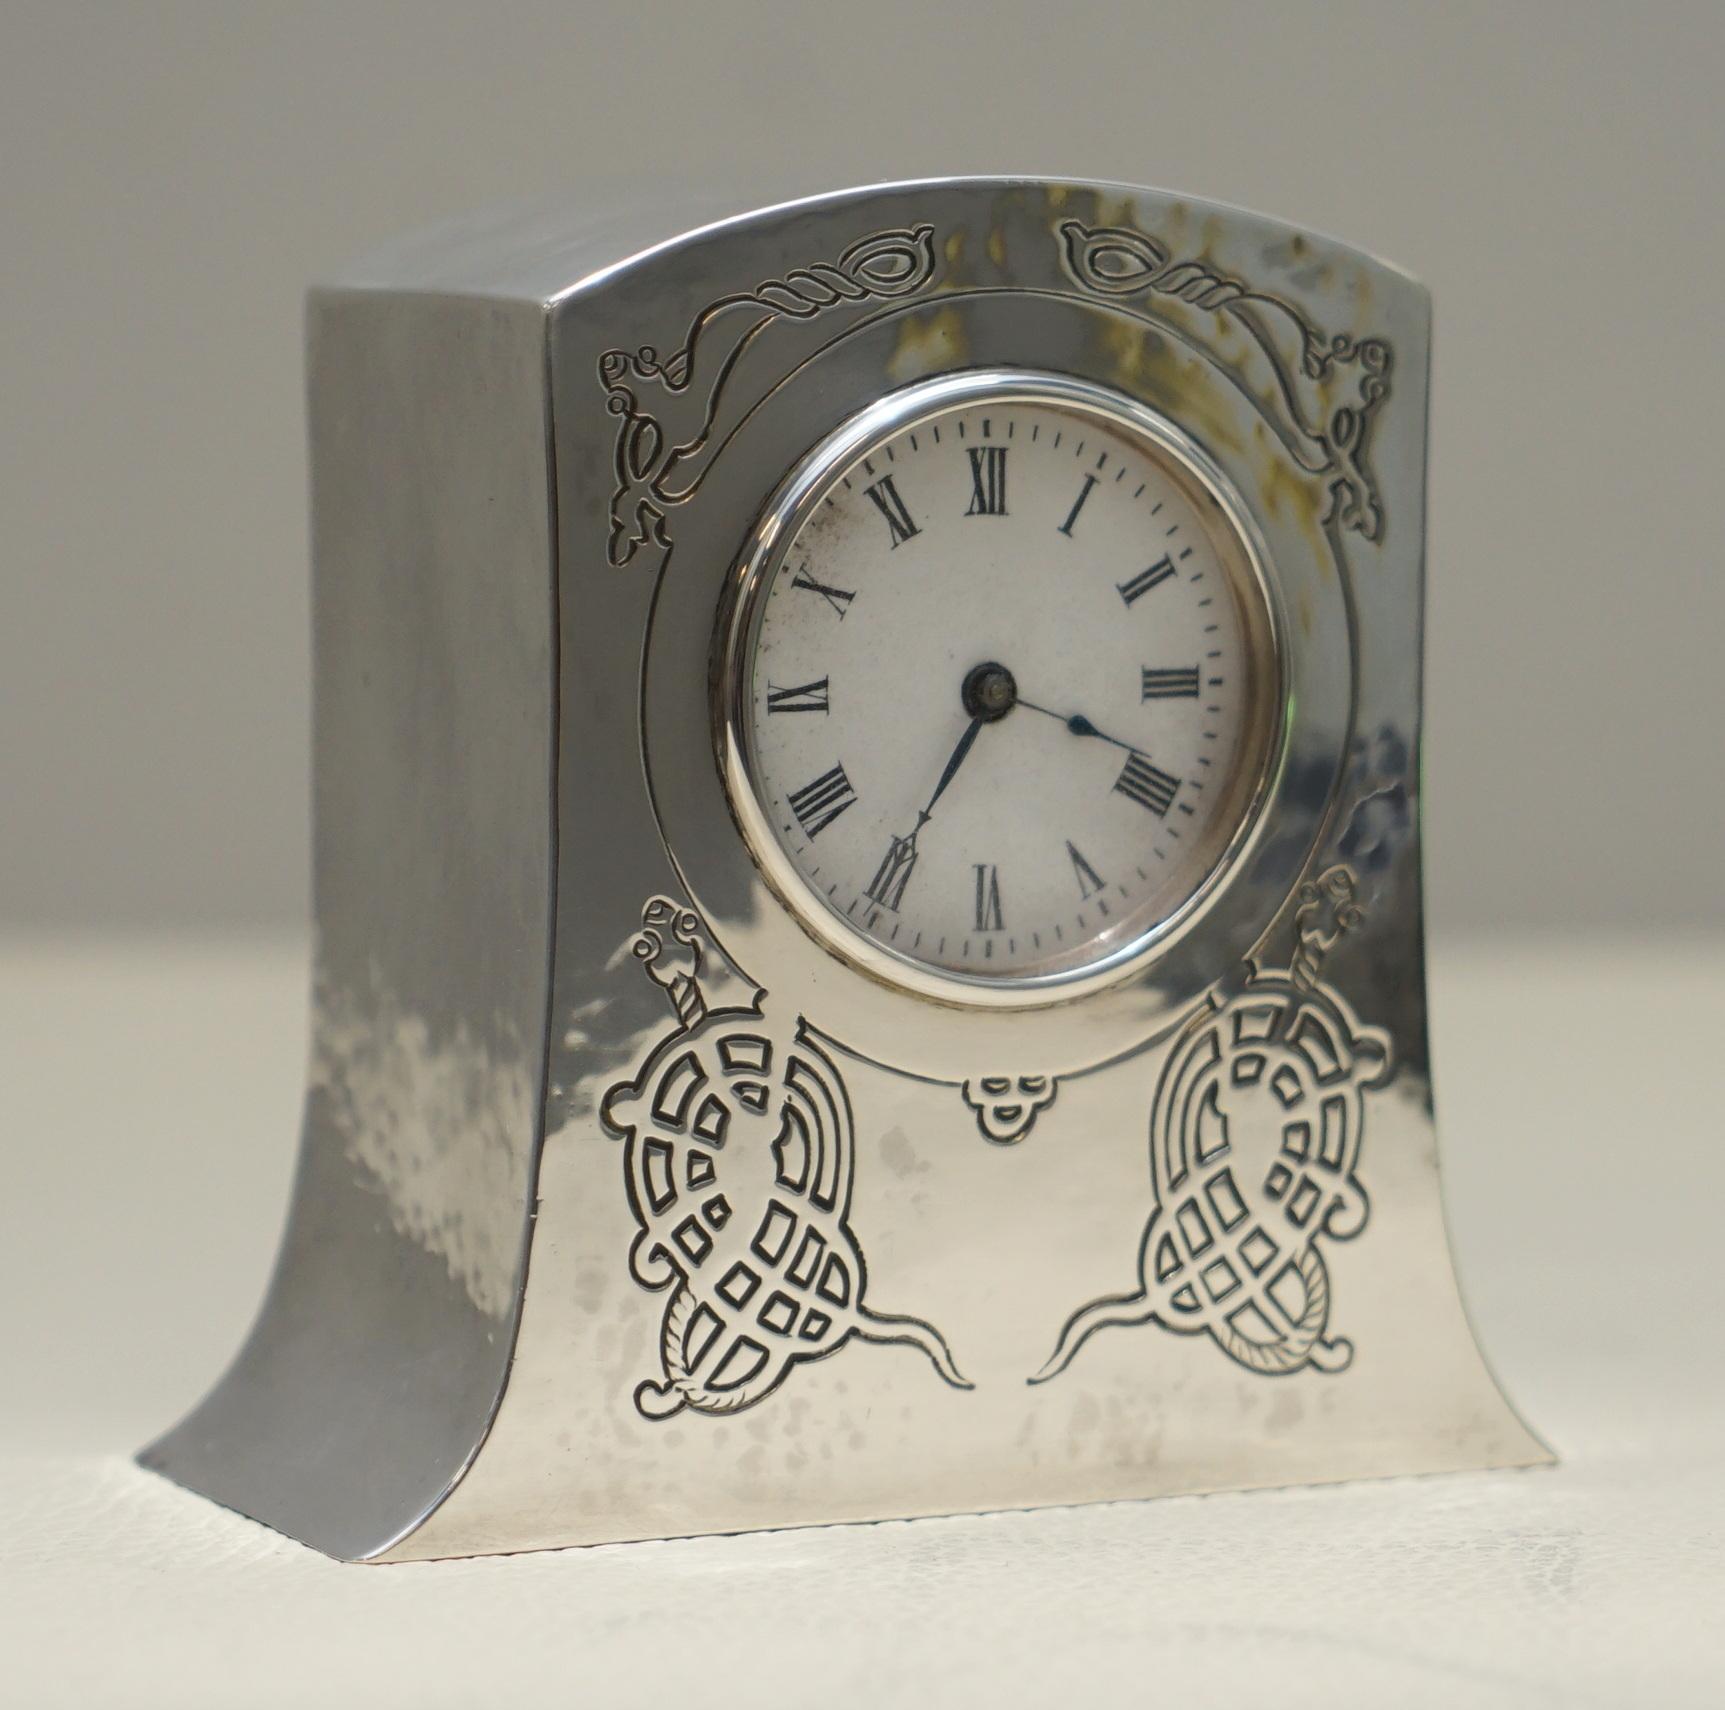 1915 on a clock